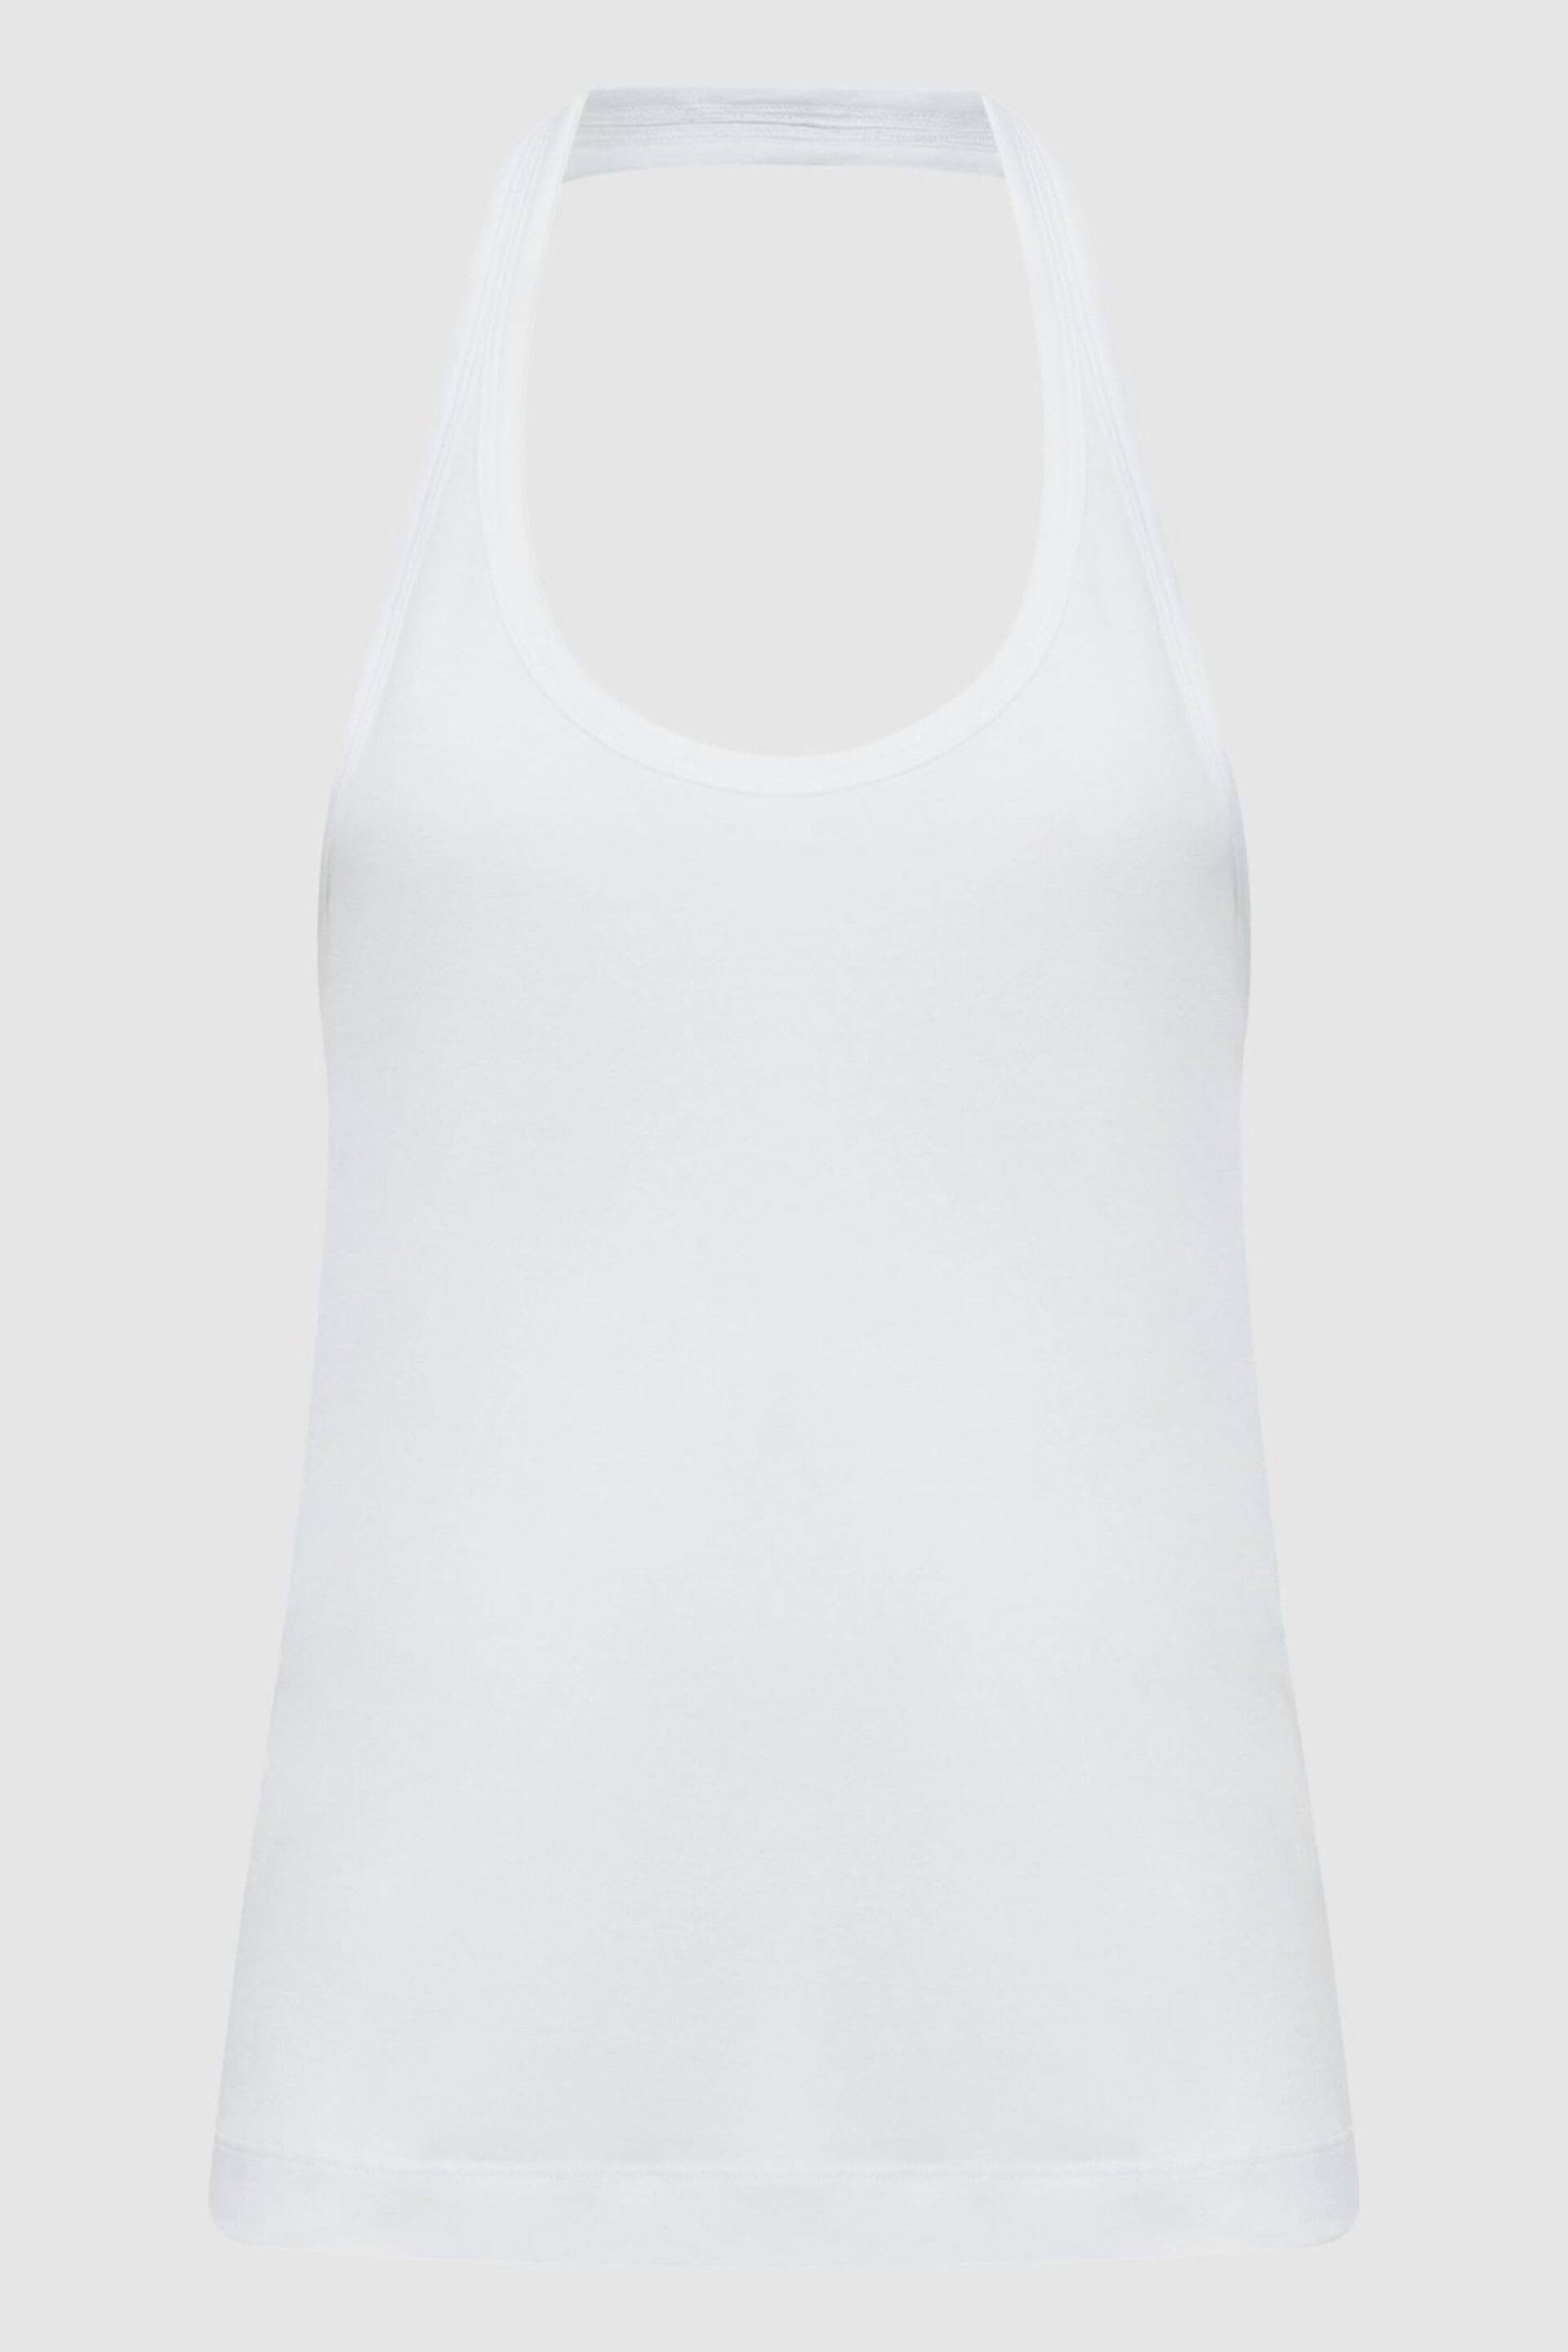 Reiss White Molly Cotton Halter Neck Vest - Image 2 of 5